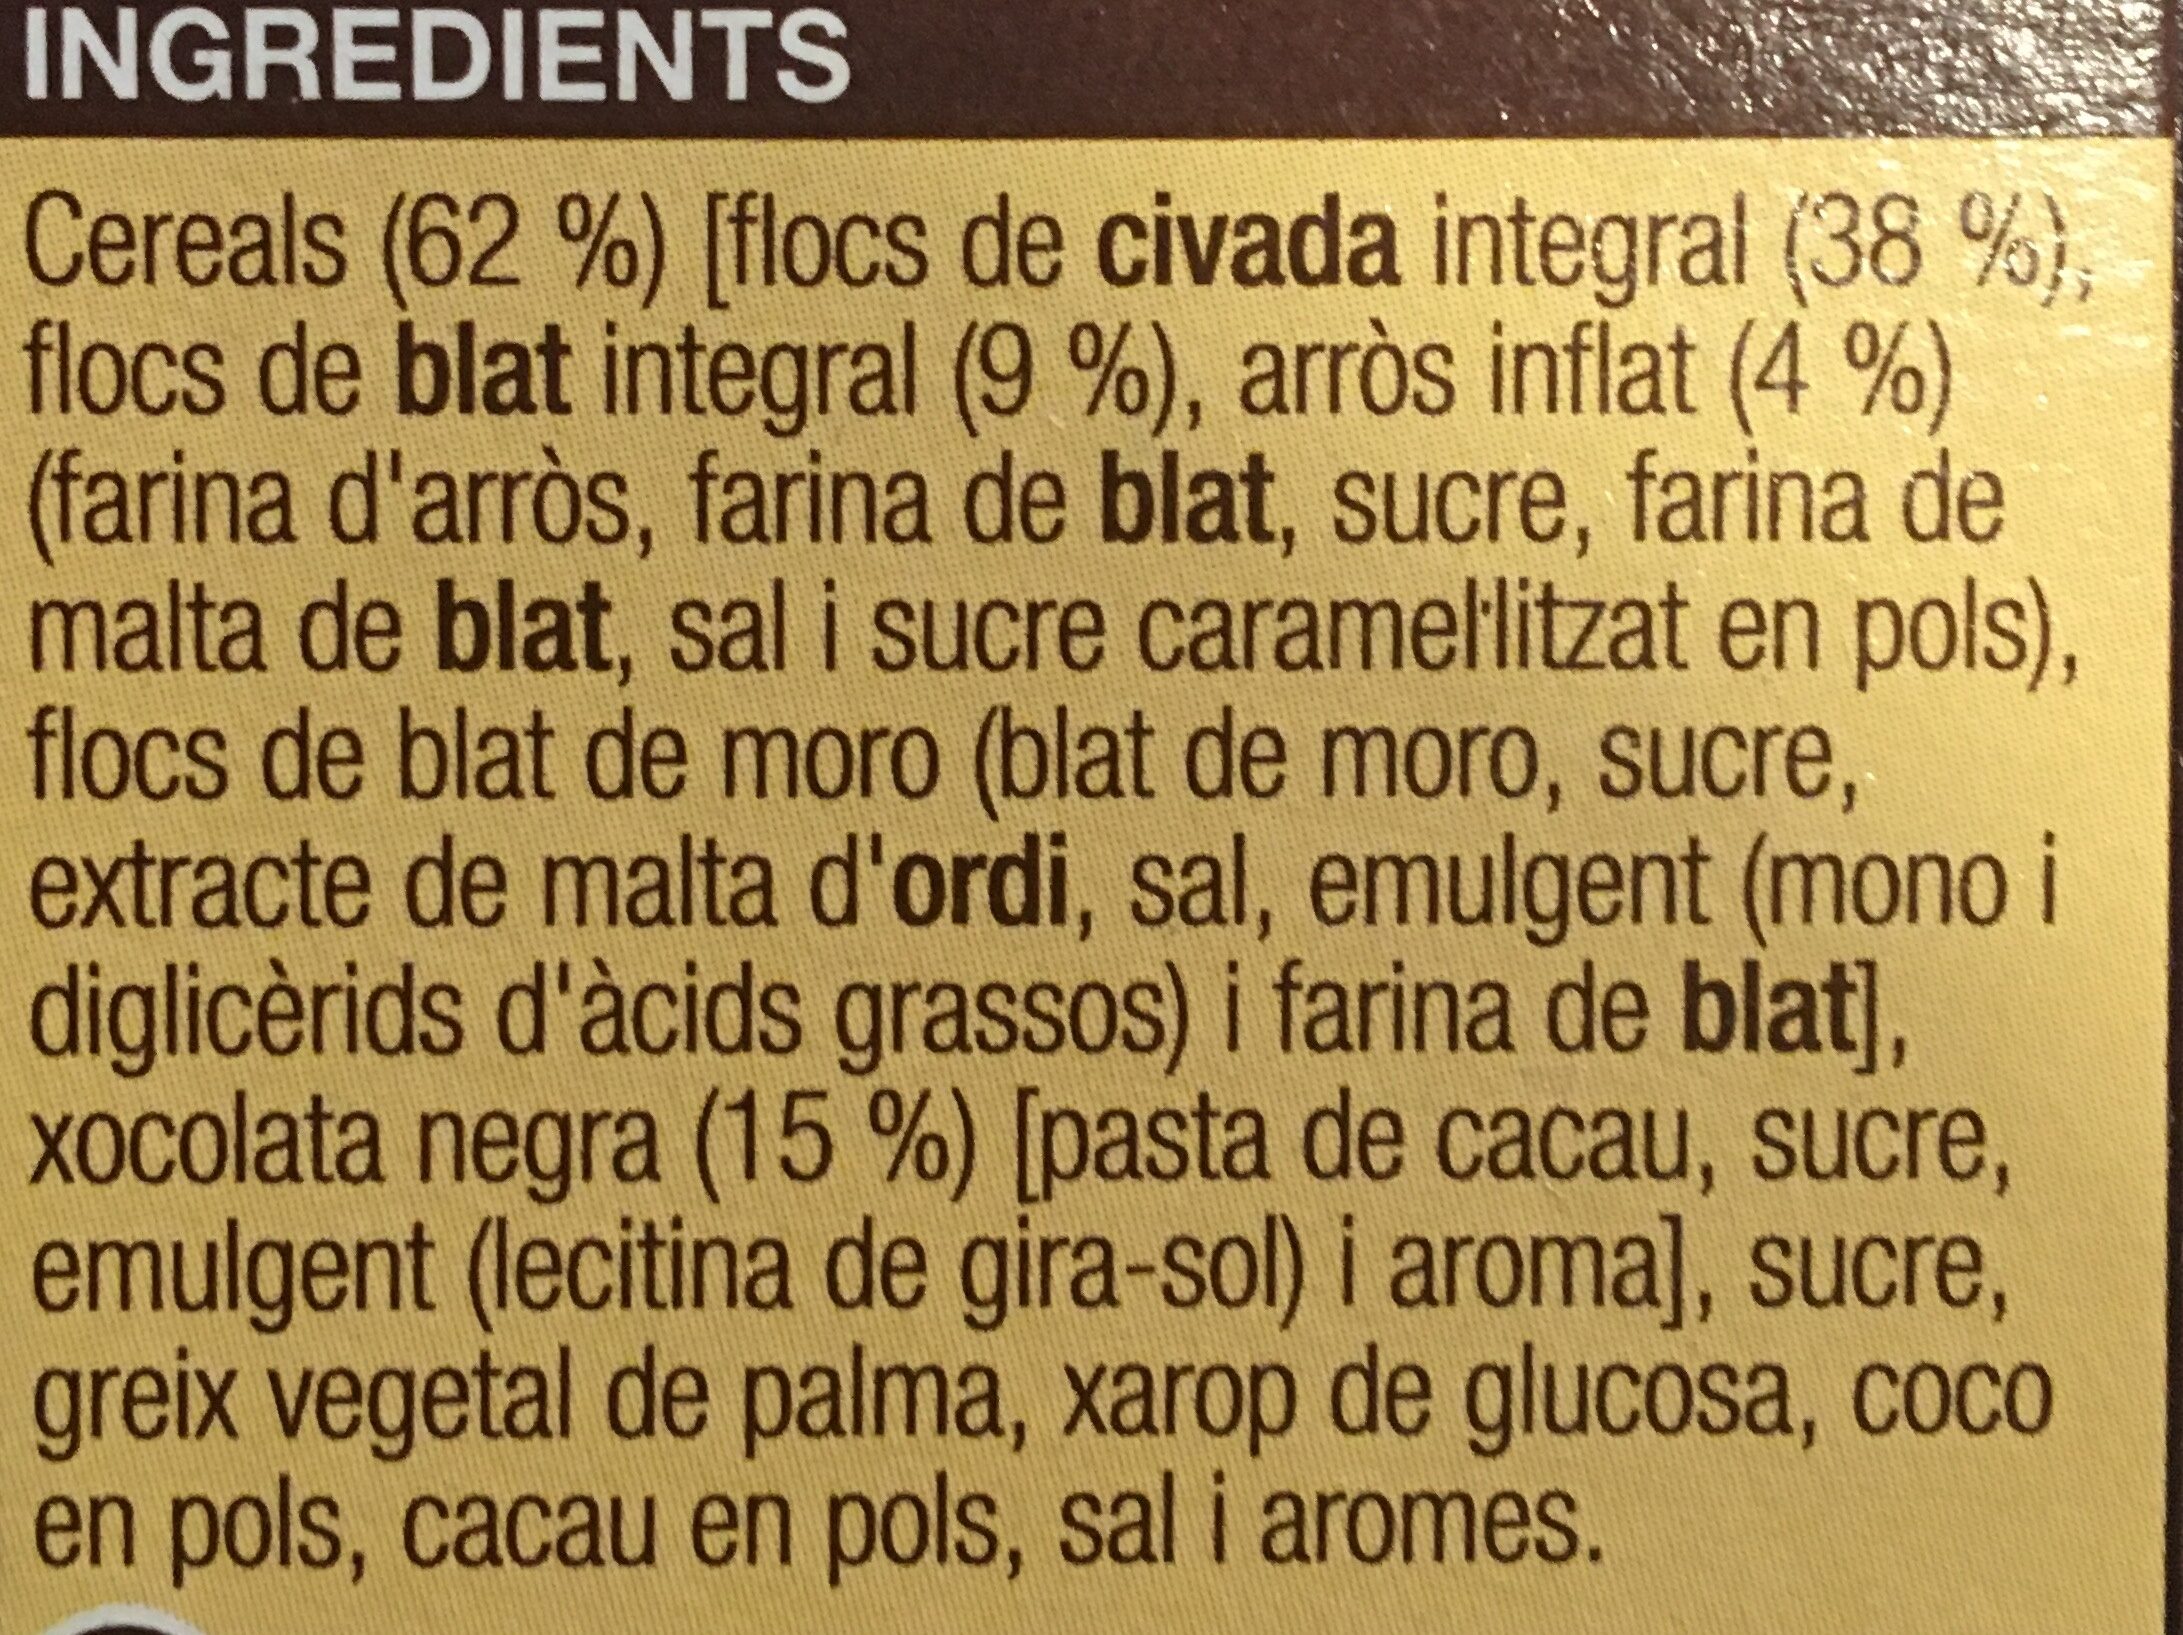 Musli xocolata - Ingredients